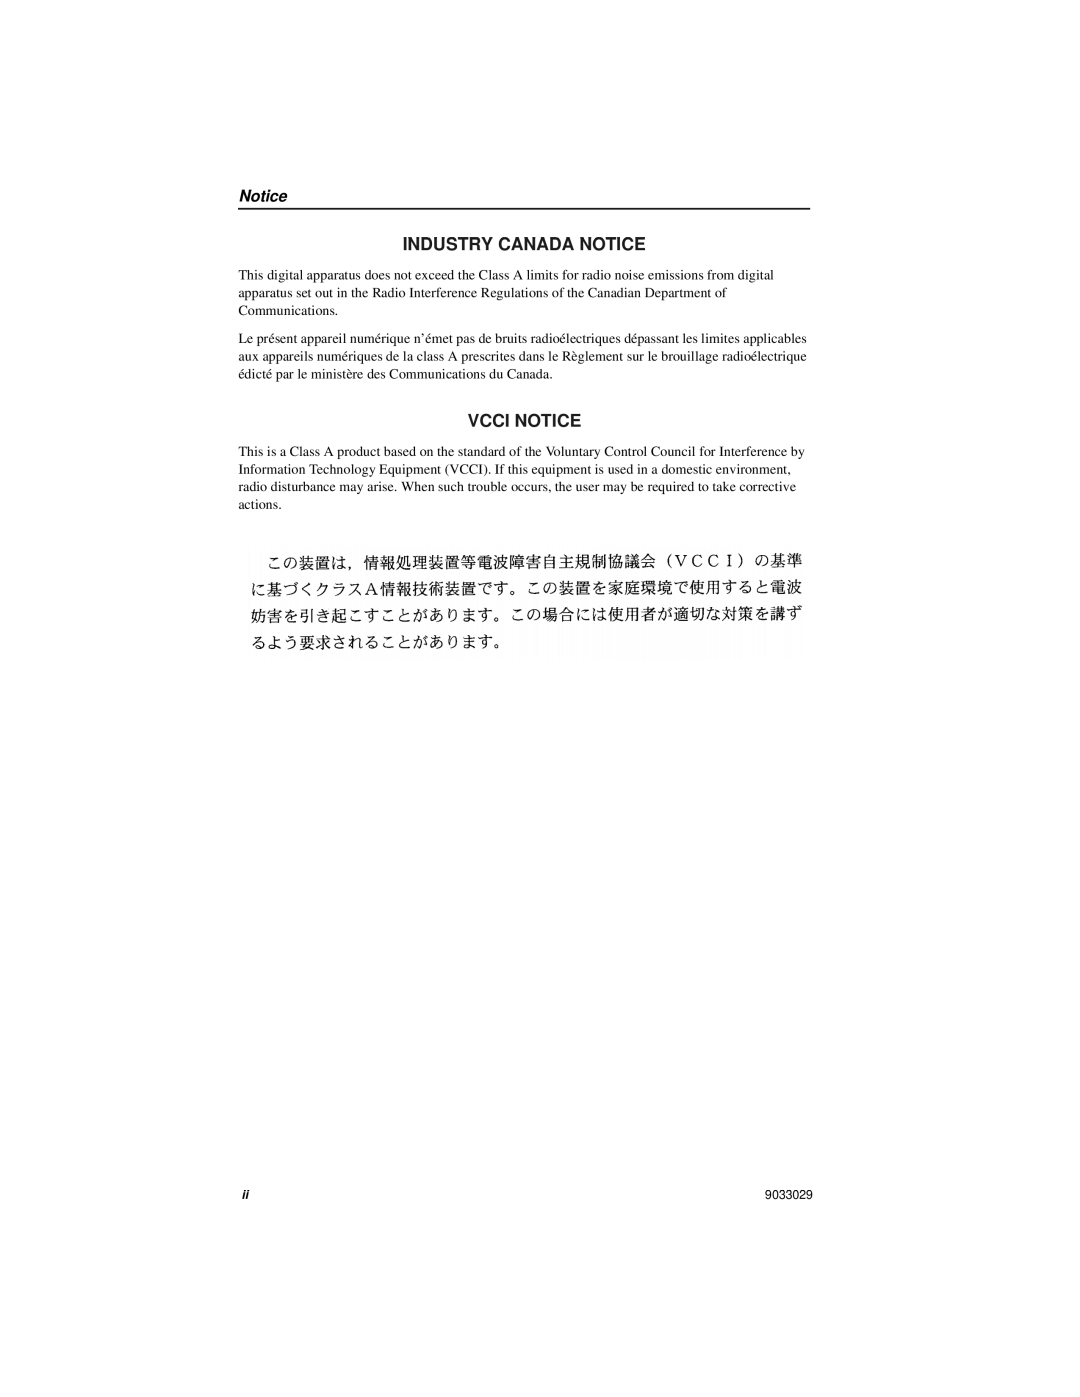 Cabletron Systems ELS100-8TXUF2 manual Industry Canada Notice, Vcci Notice 